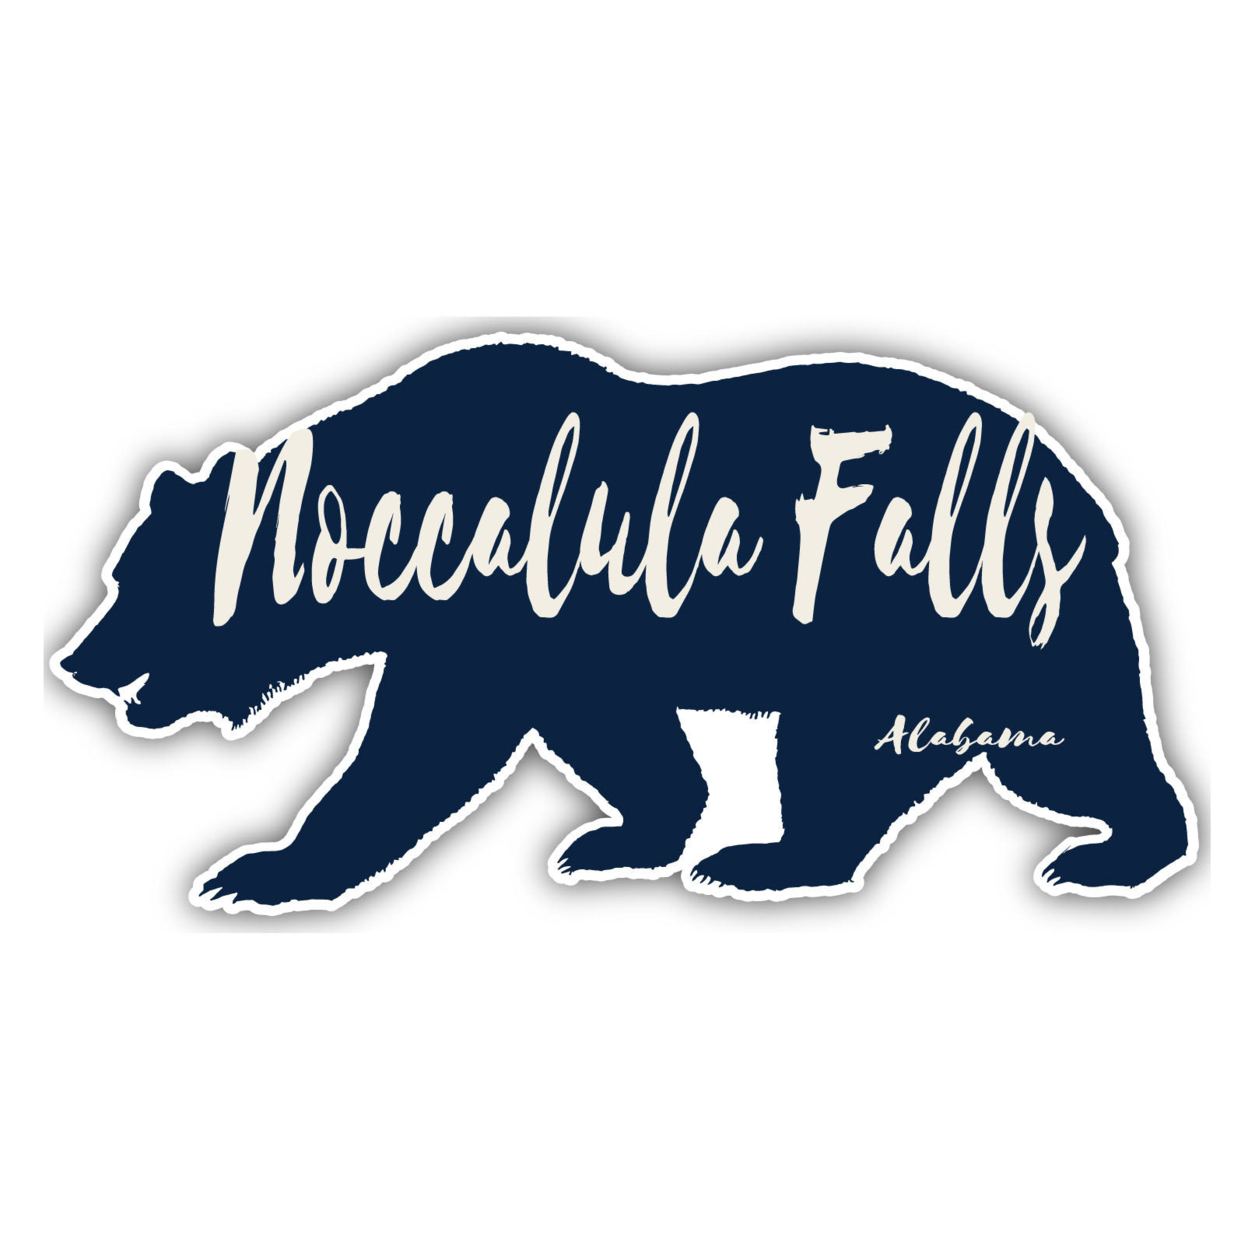 Noccalula Falls Alabama Souvenir Decorative Stickers (Choose Theme And Size) - Single Unit, 4-Inch, Bear